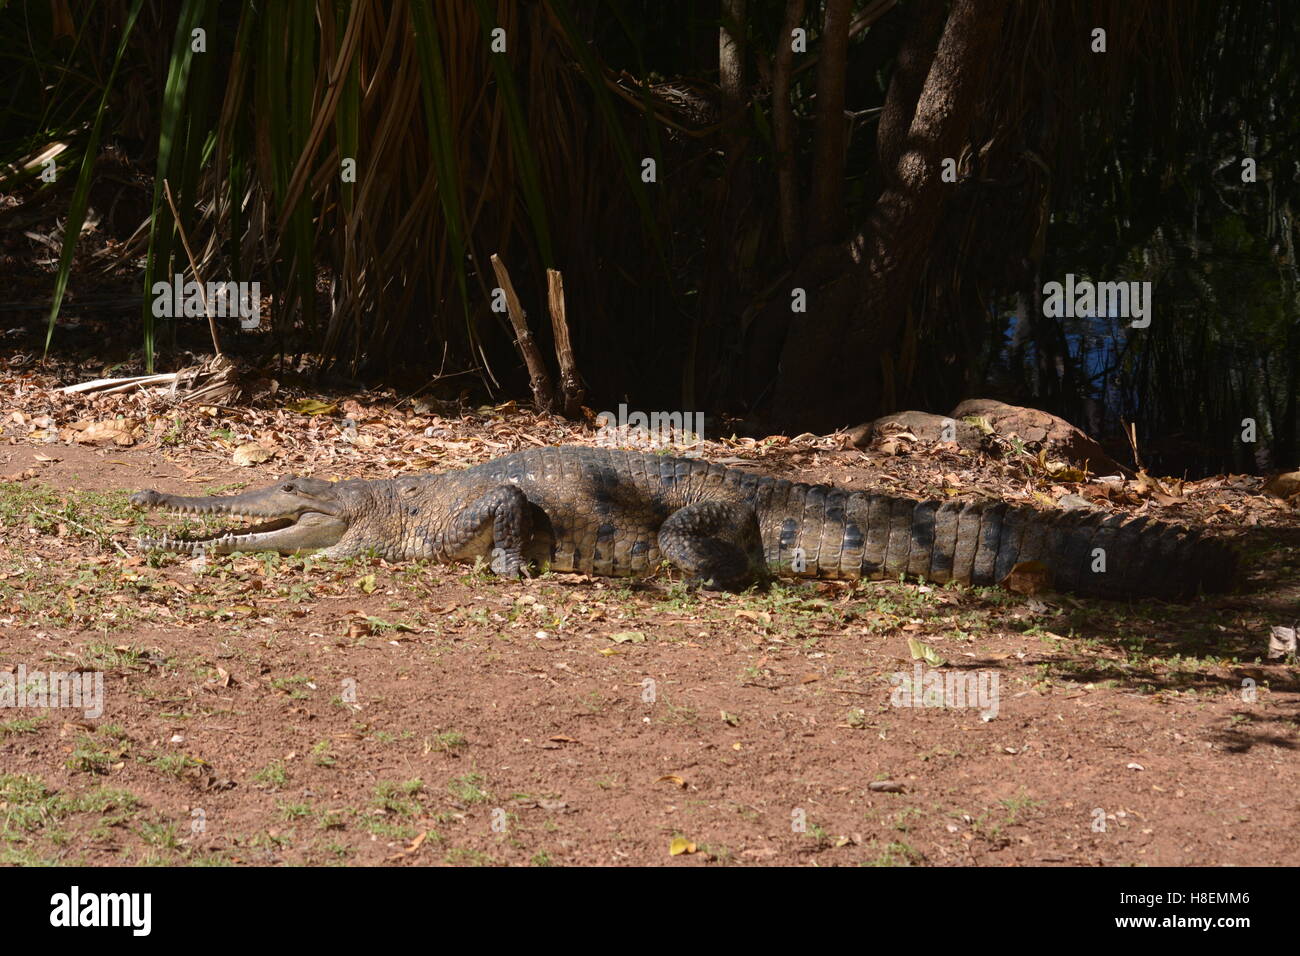 Crocodile basking in the sun Timber creek Australia Stock Photo